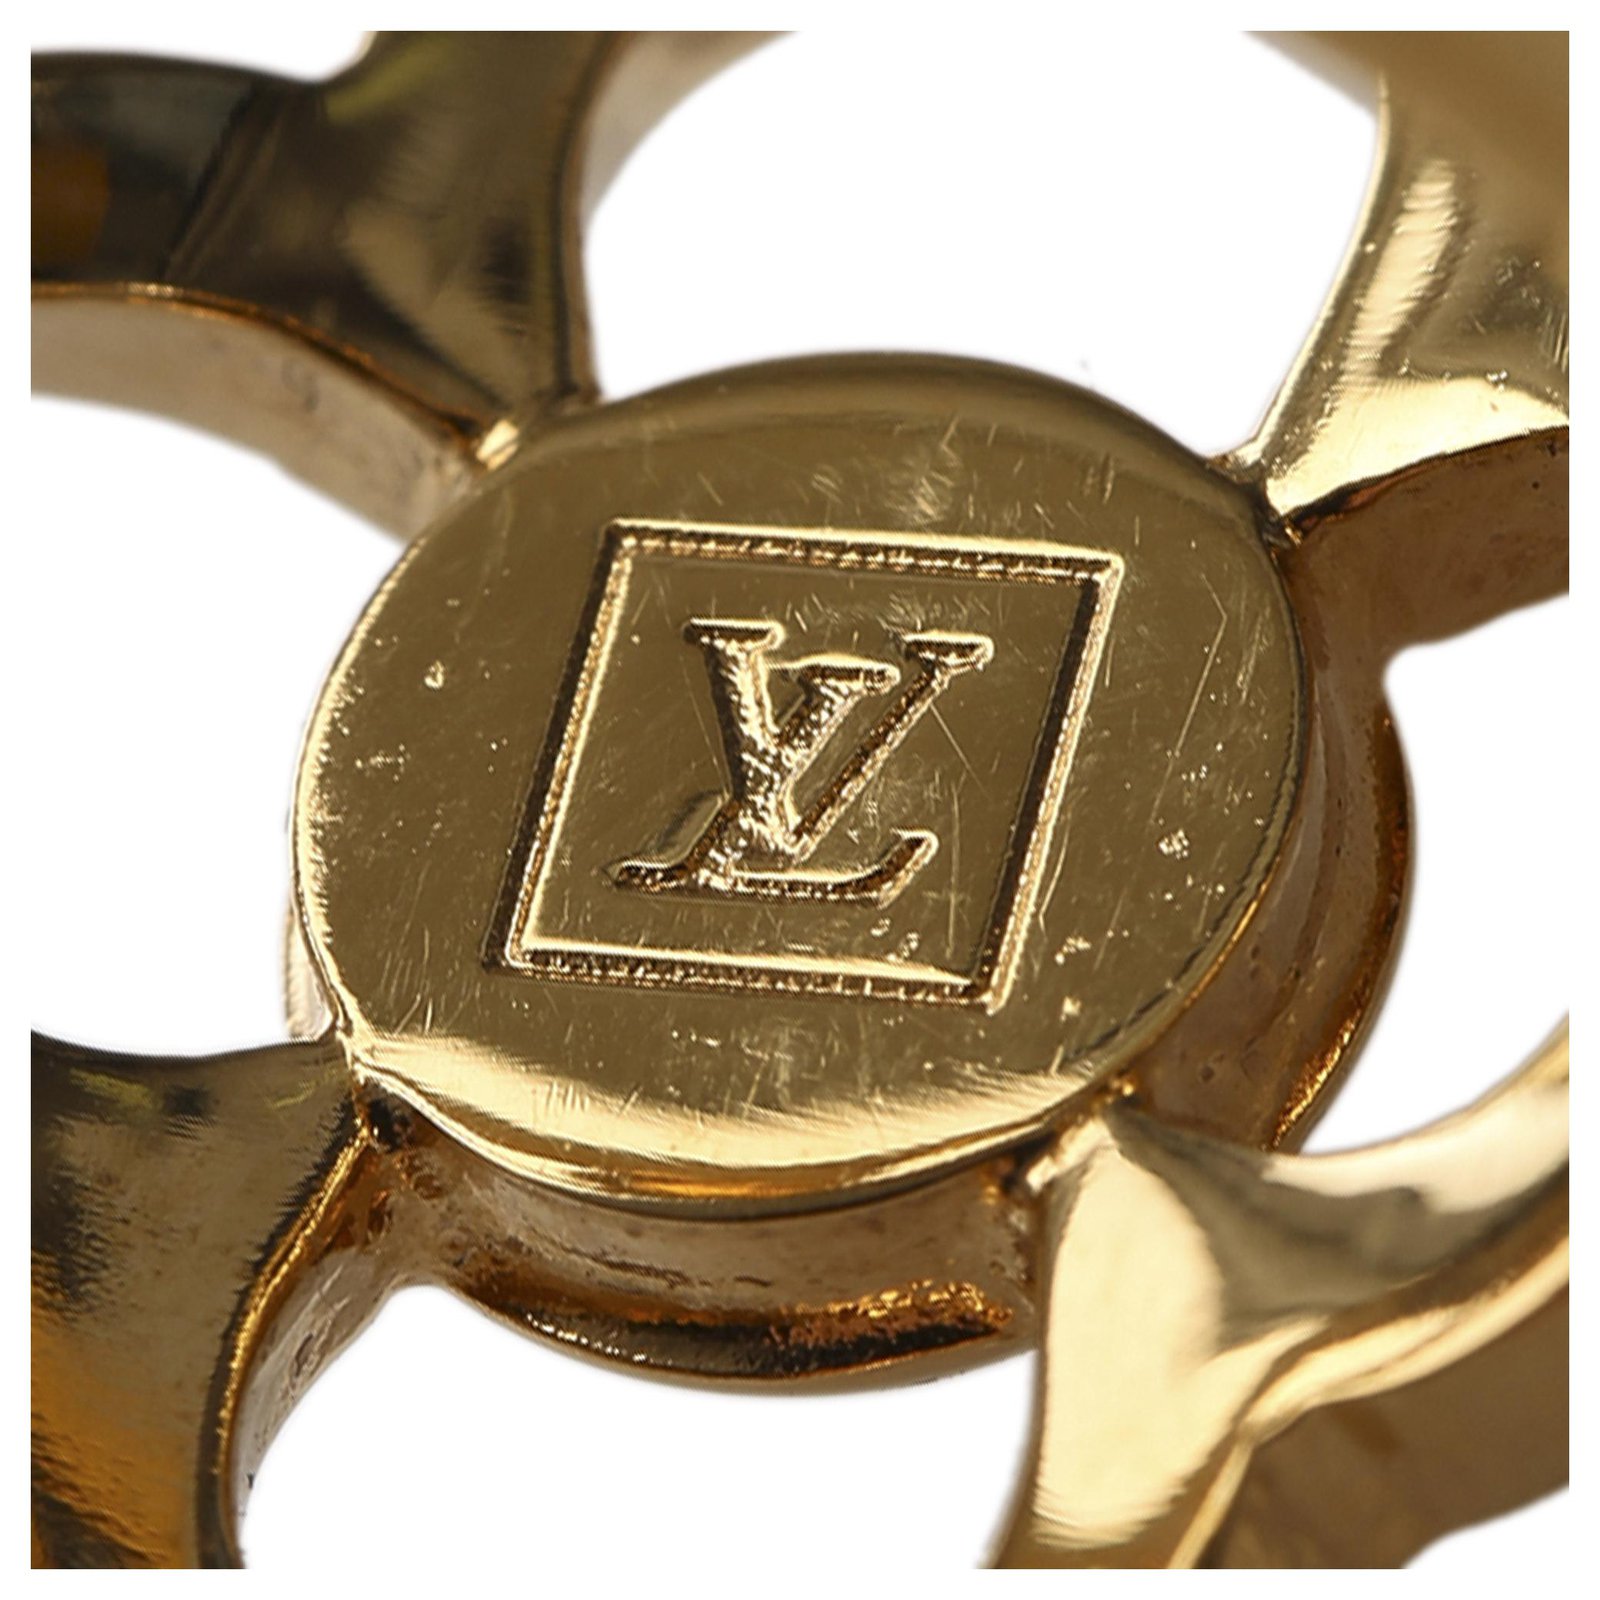 Louis Vuitton Gold Crystal Flower Power Ring Silvery Golden Metal